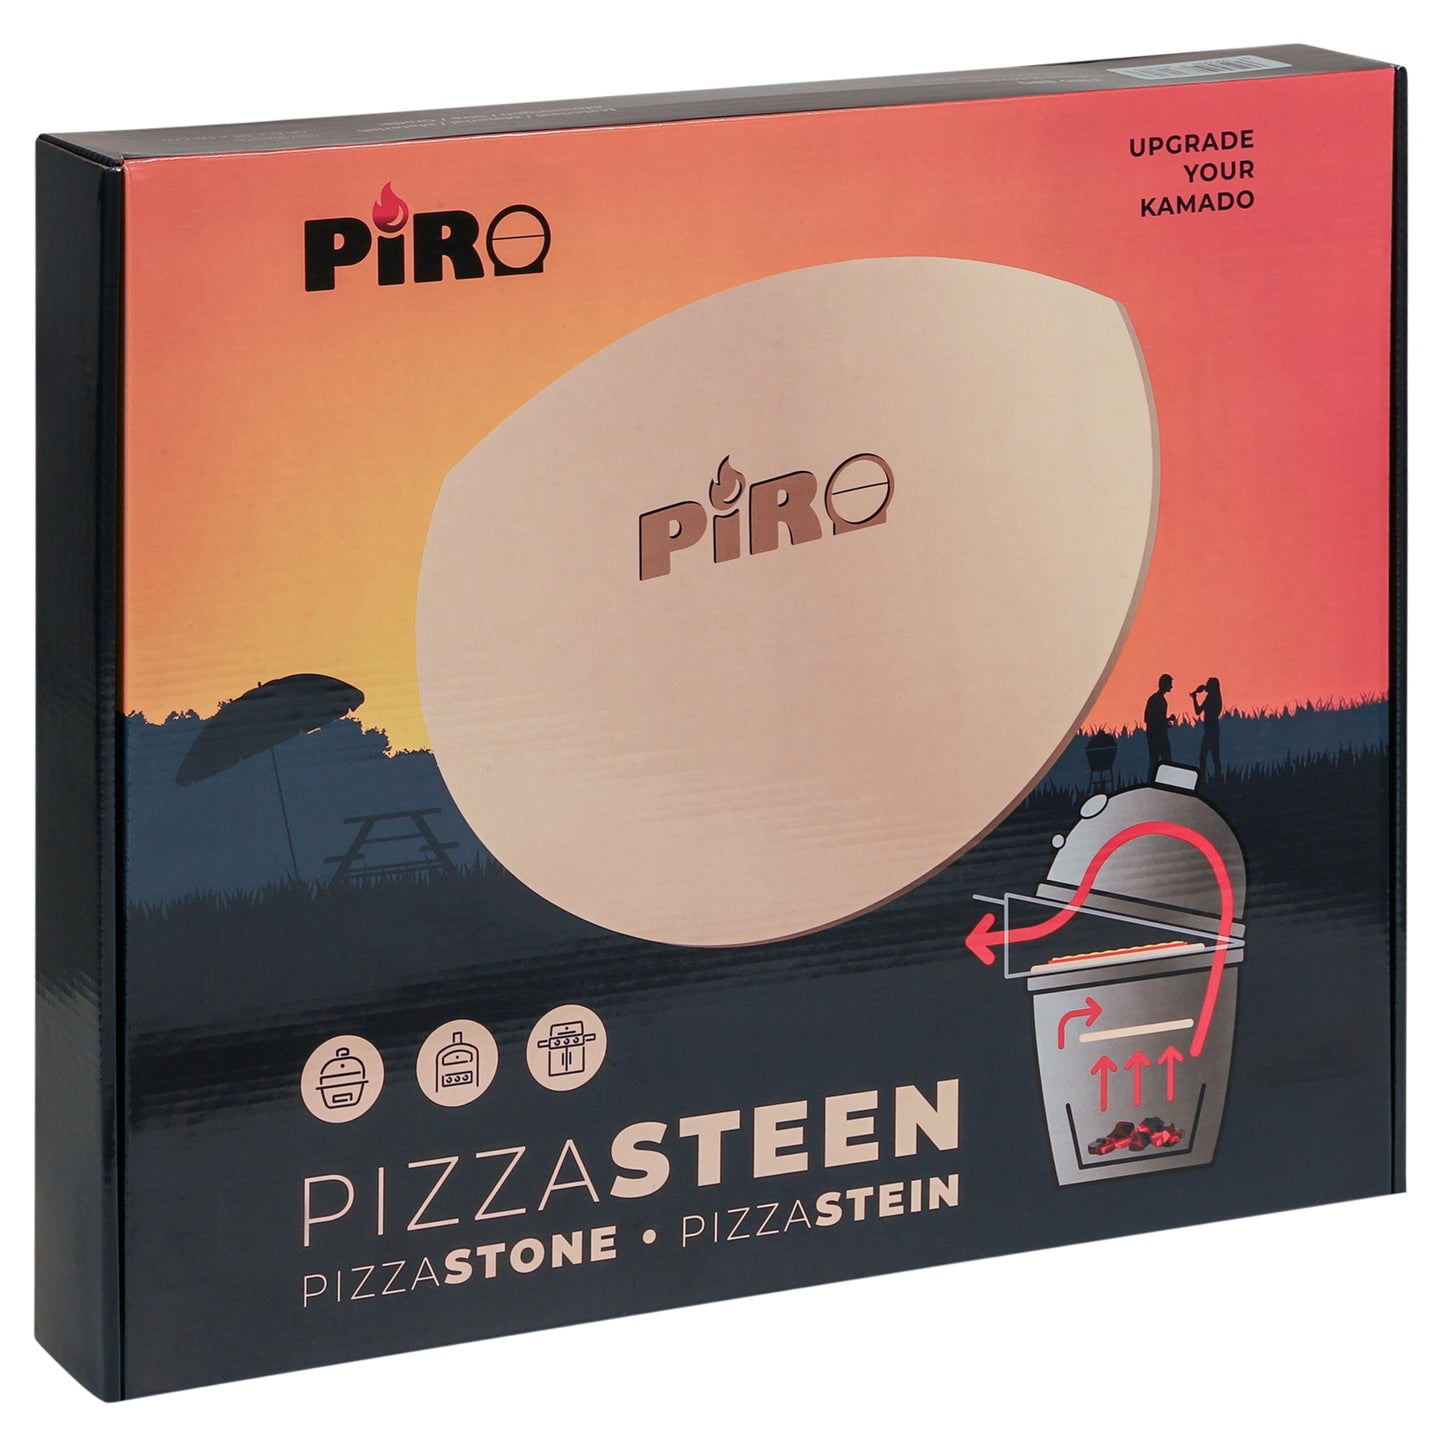 Piro Pizzastone box